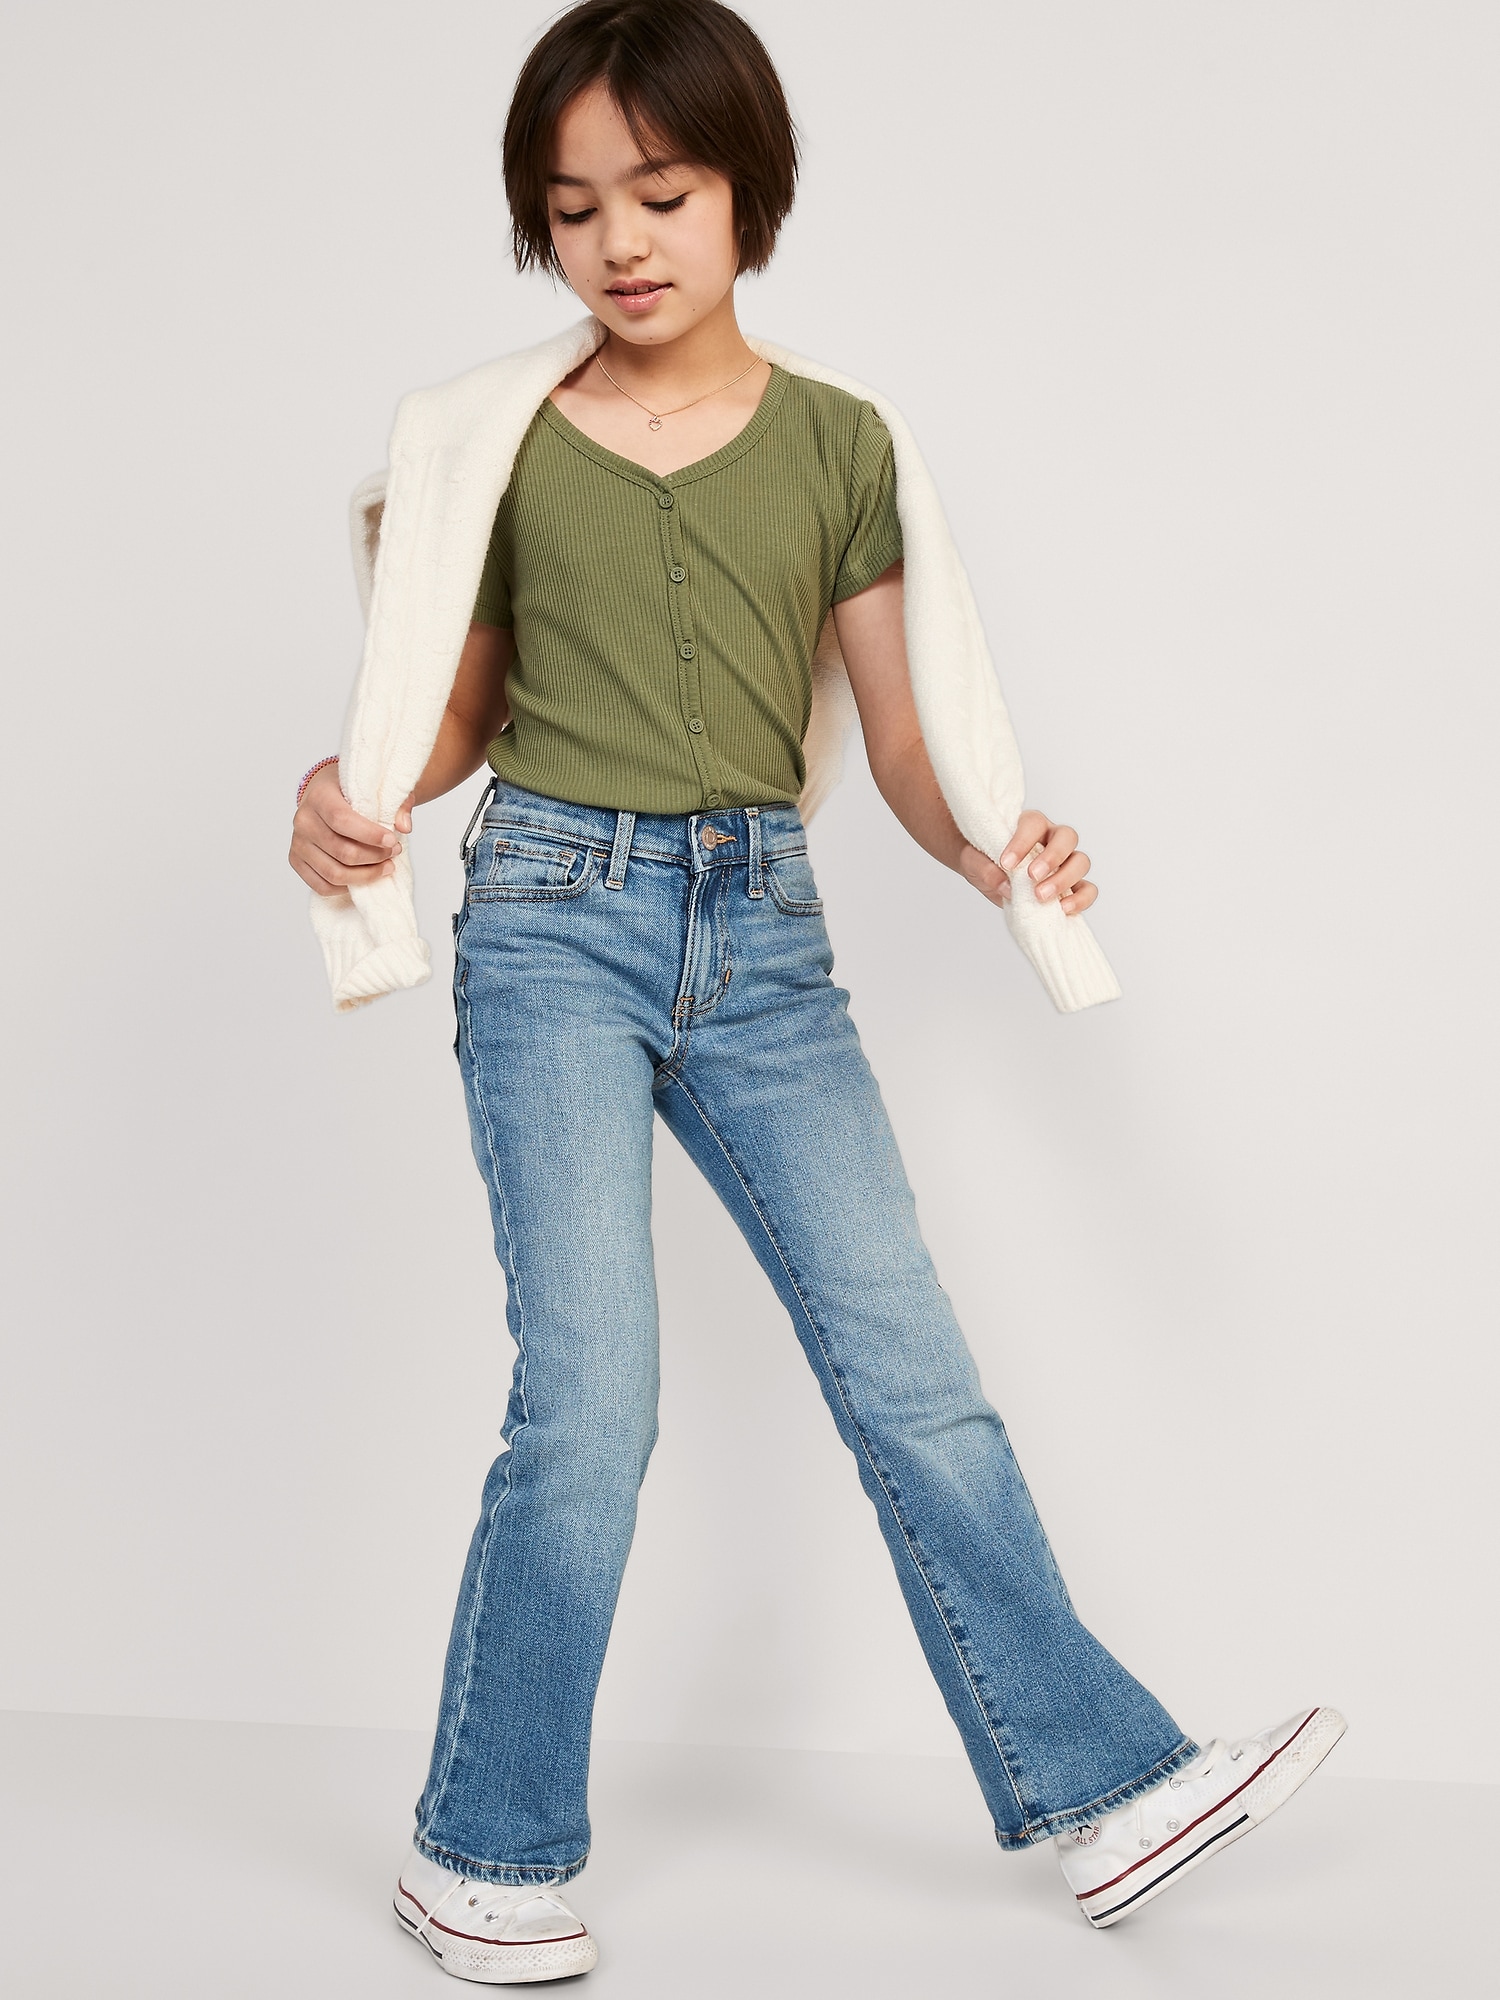 Jeans Kids Girls Style Fashion, Kids Girls Flare Jeans